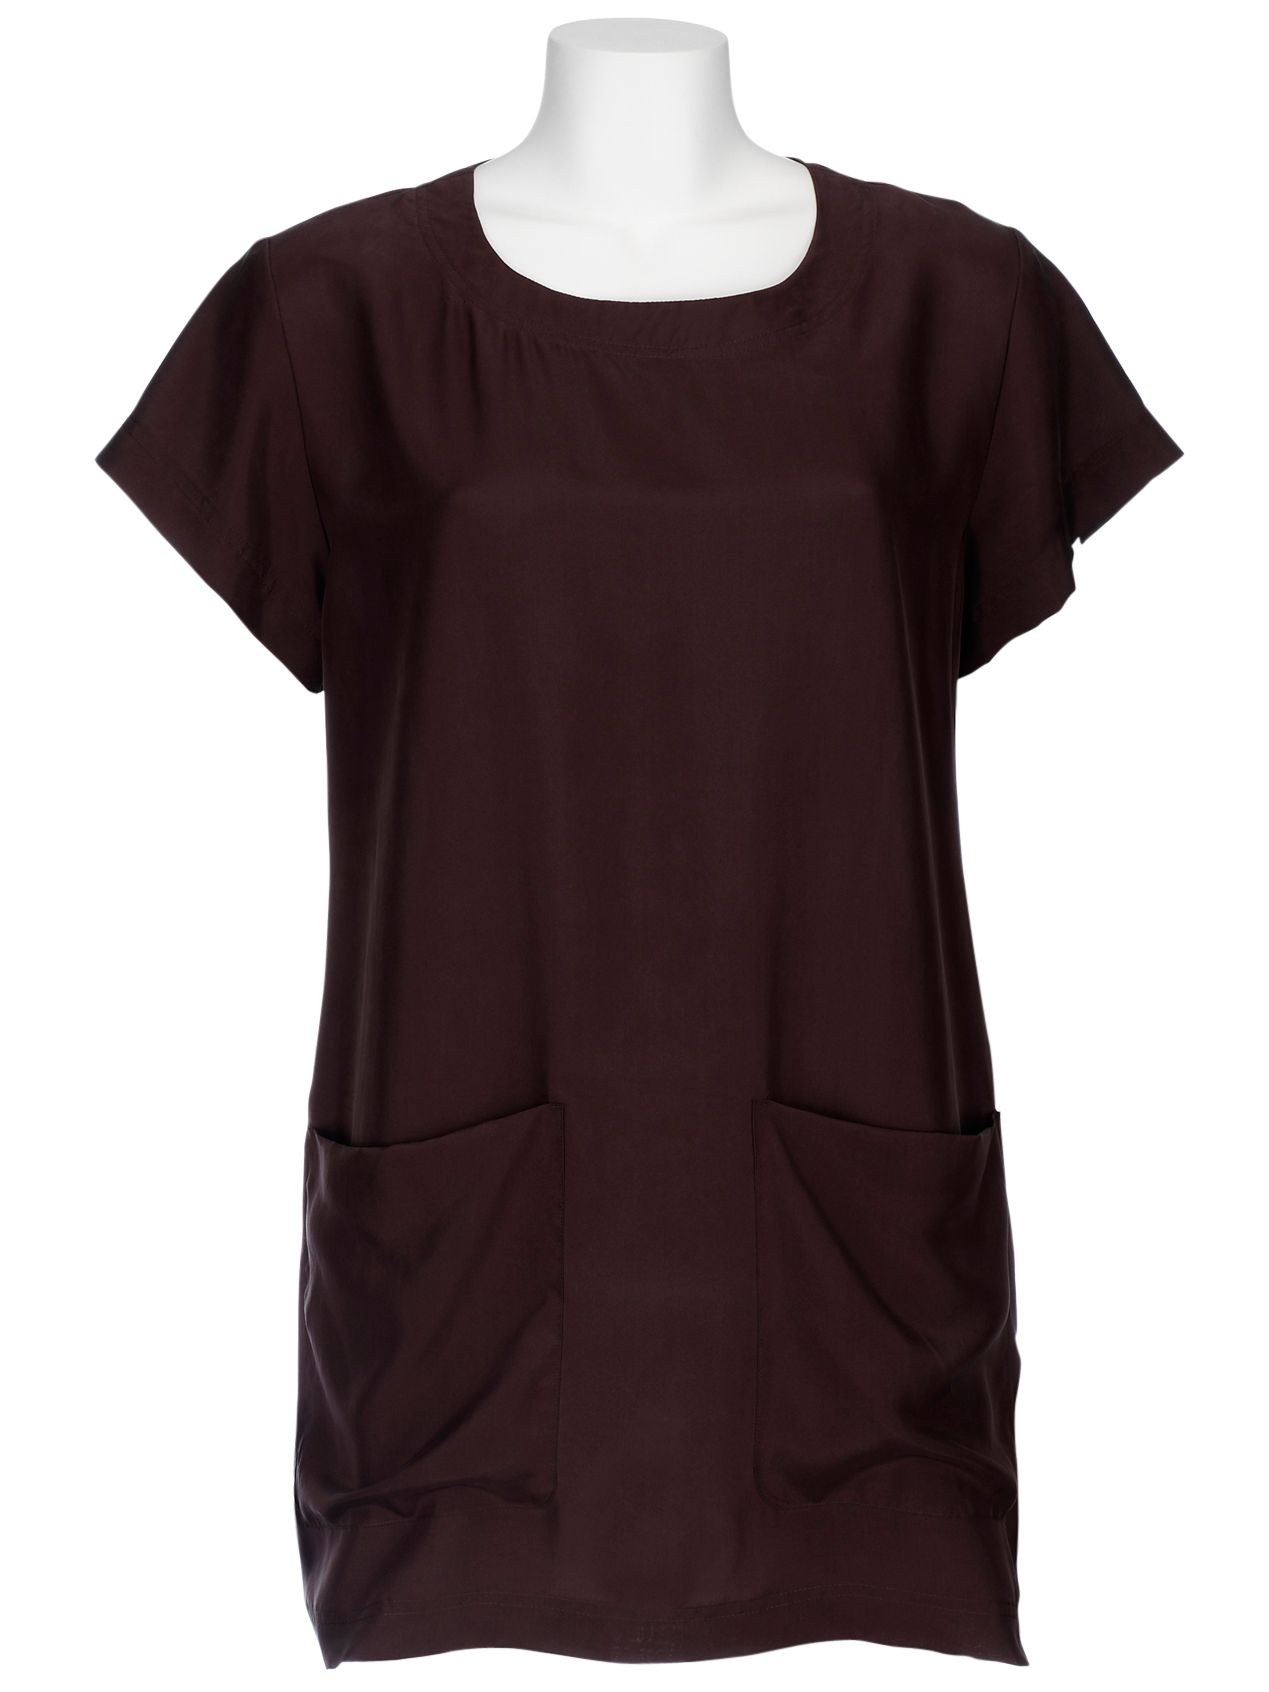 FWM Silk Satin Oversized T-Shirt, Dark Chocolate